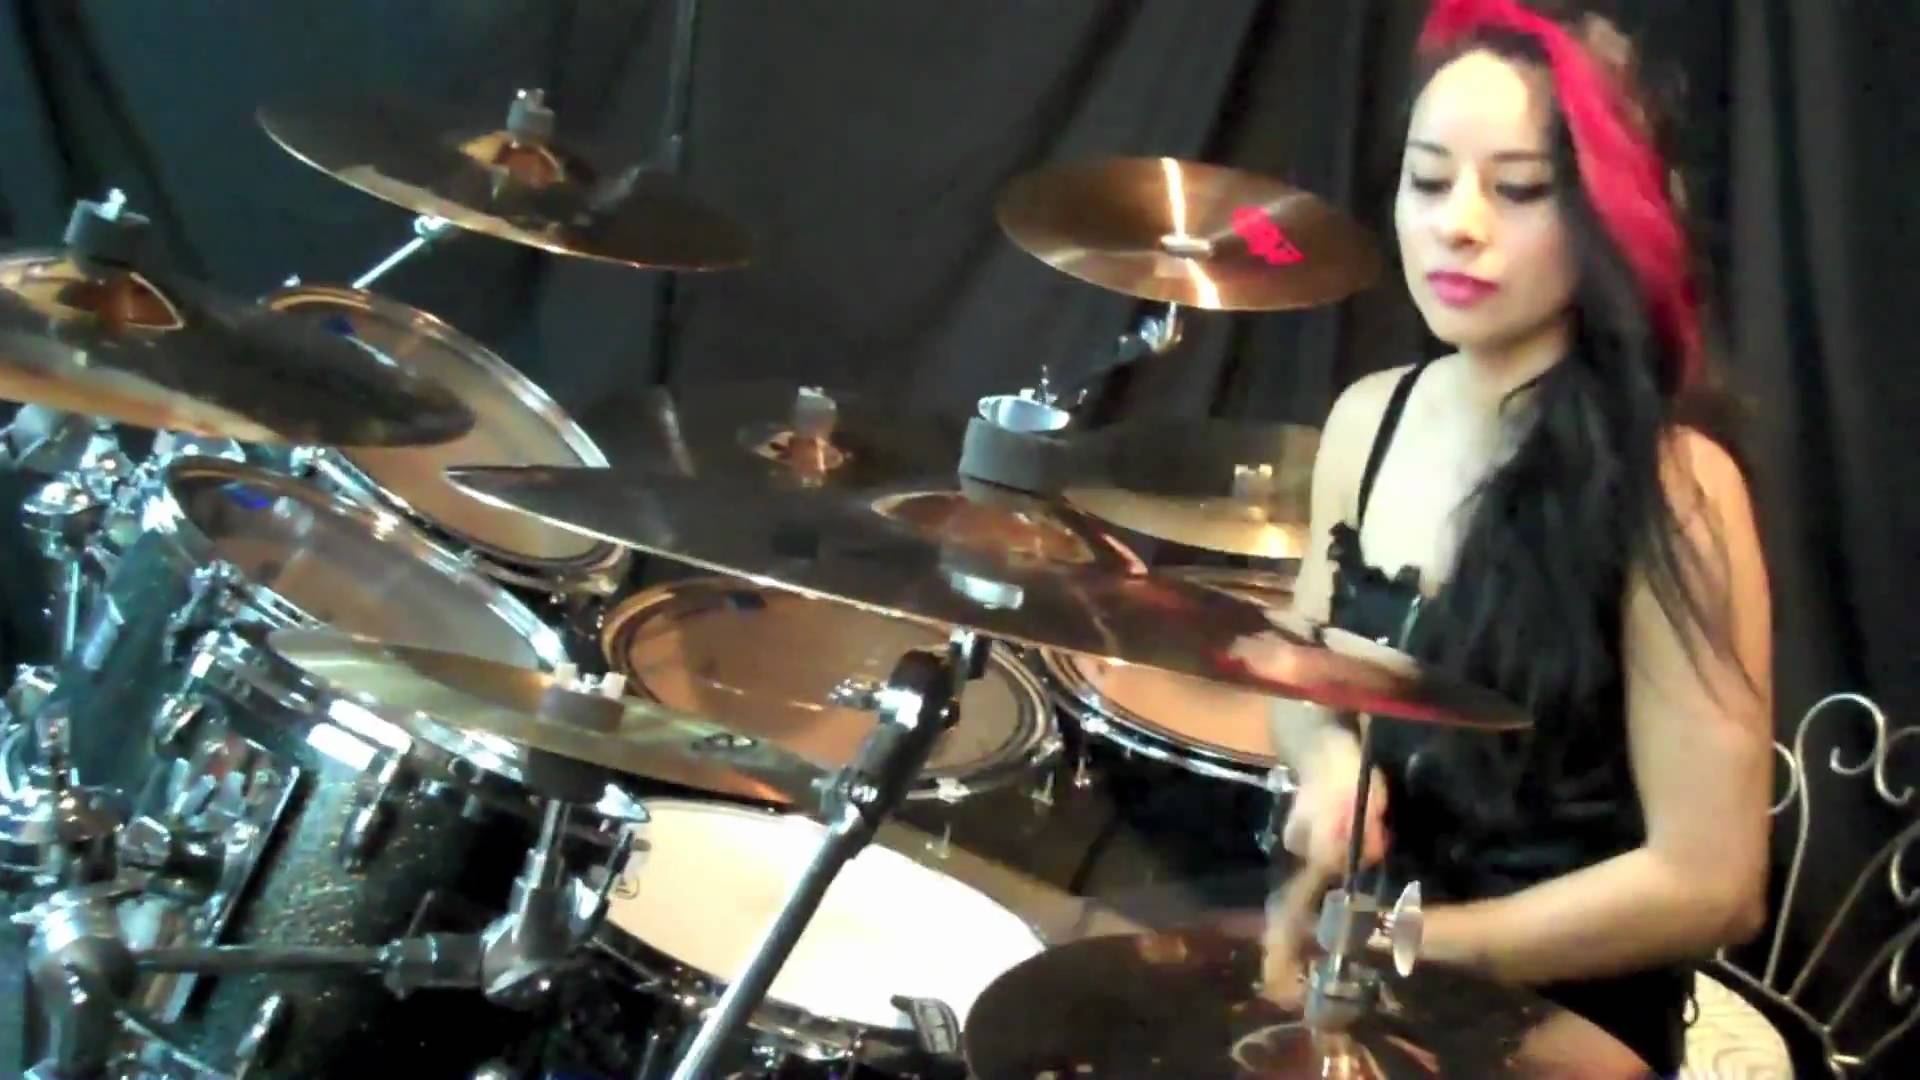 Lux Drummerette #5